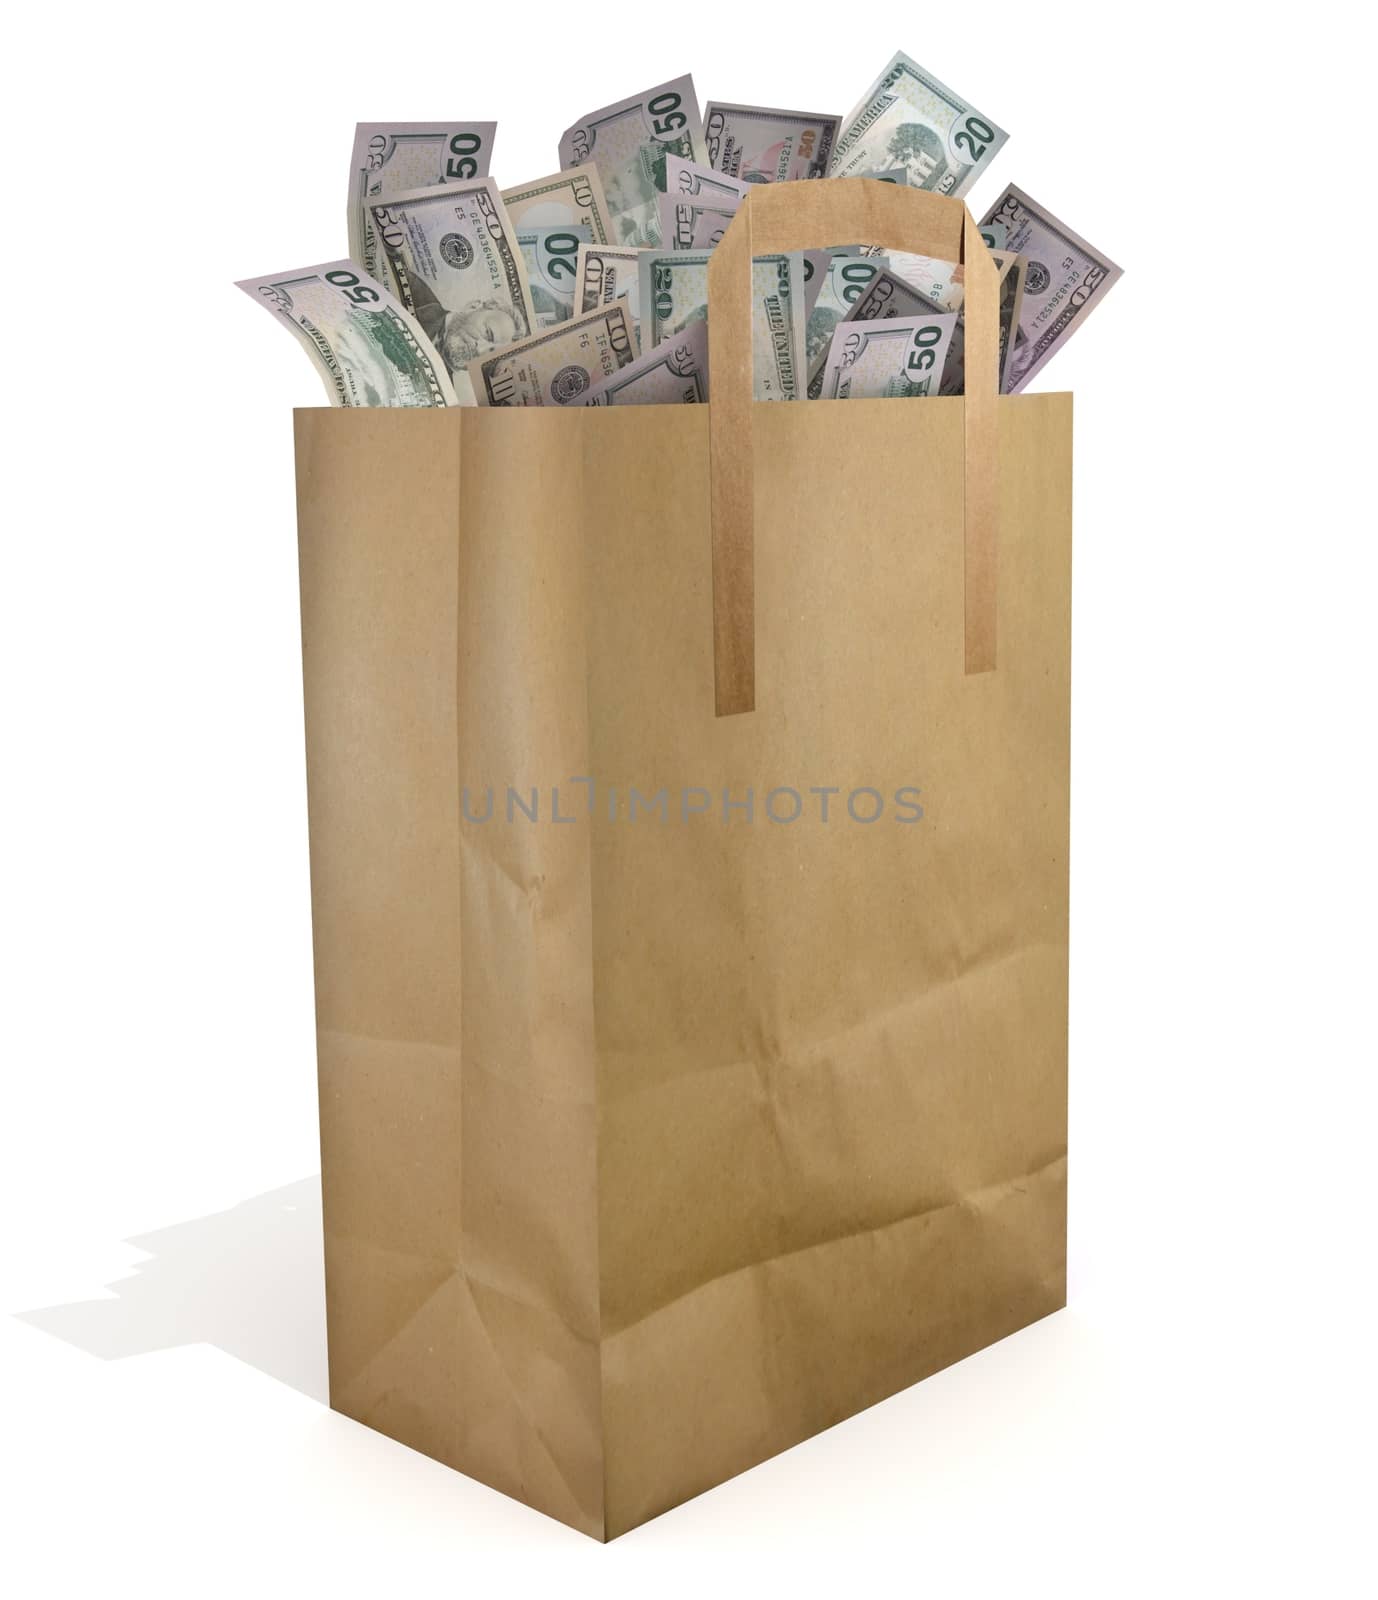 Illustration of a paper bag full of money